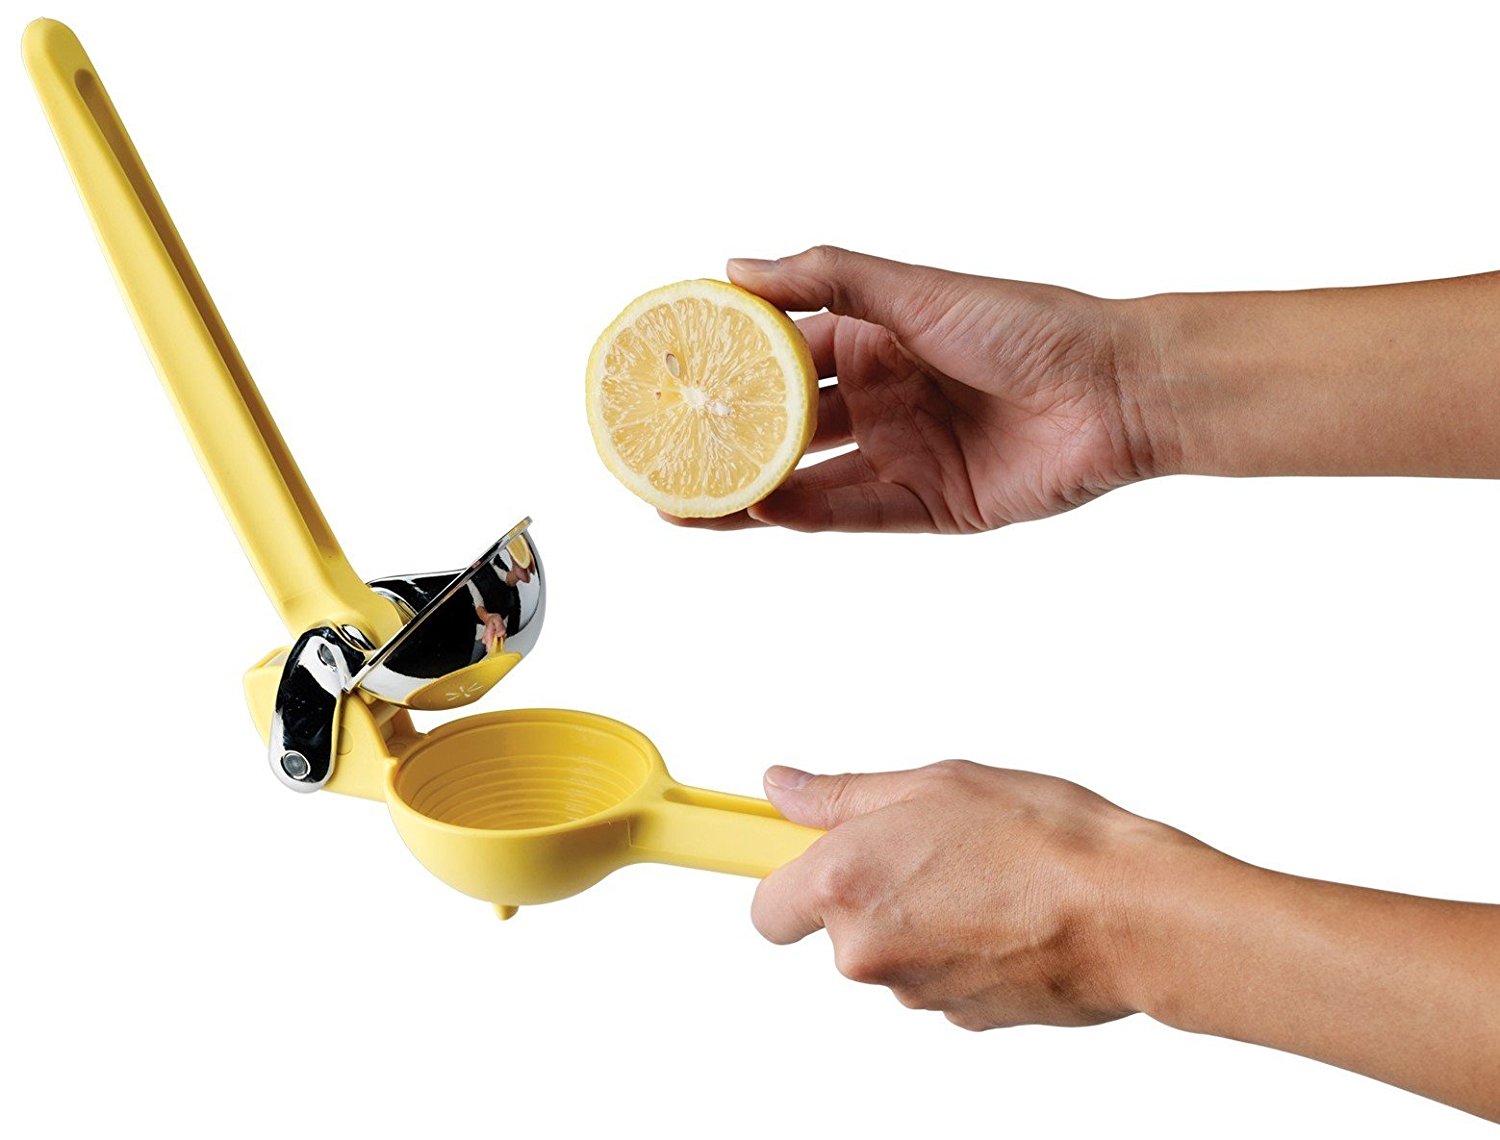  Ankarsrum SPA Citrus Juicer: Mixer Accessories: Home